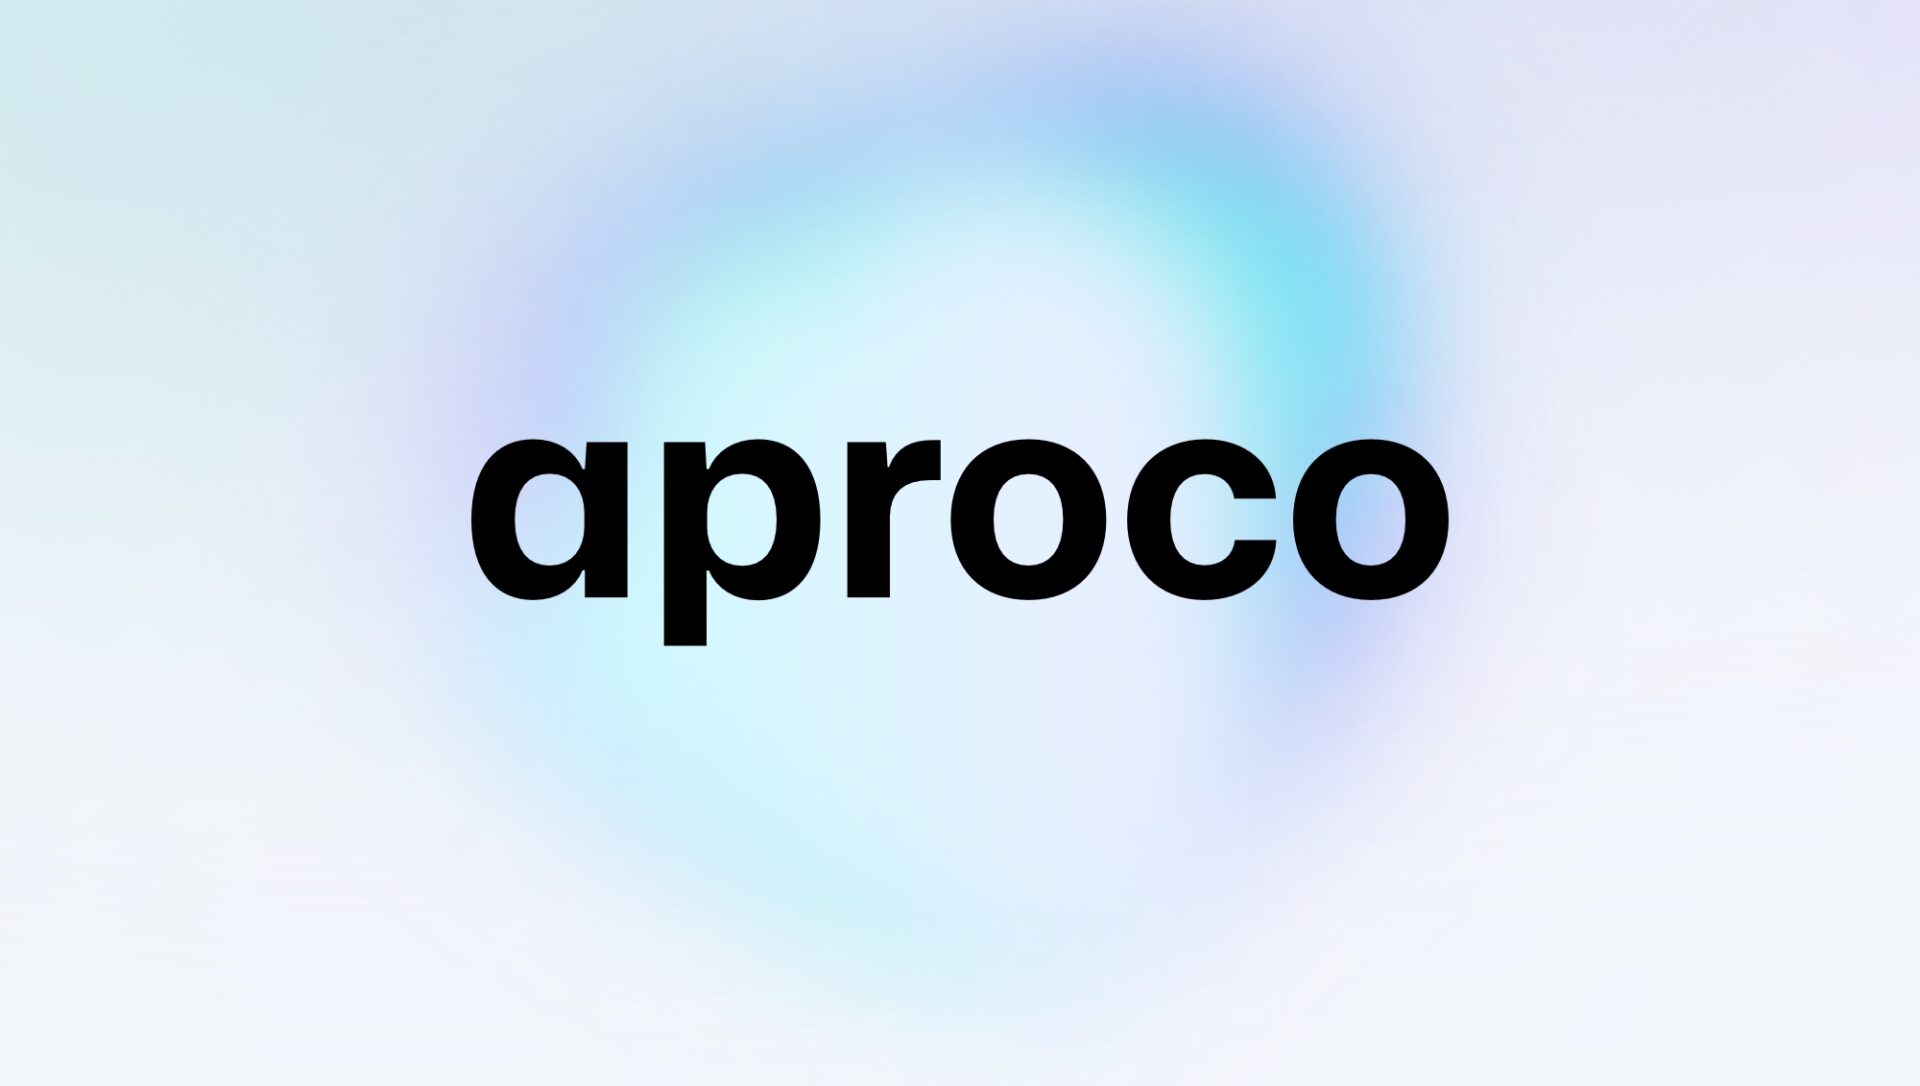 We are launching a collaboration with Aproco.io - Ignaszak Law Company